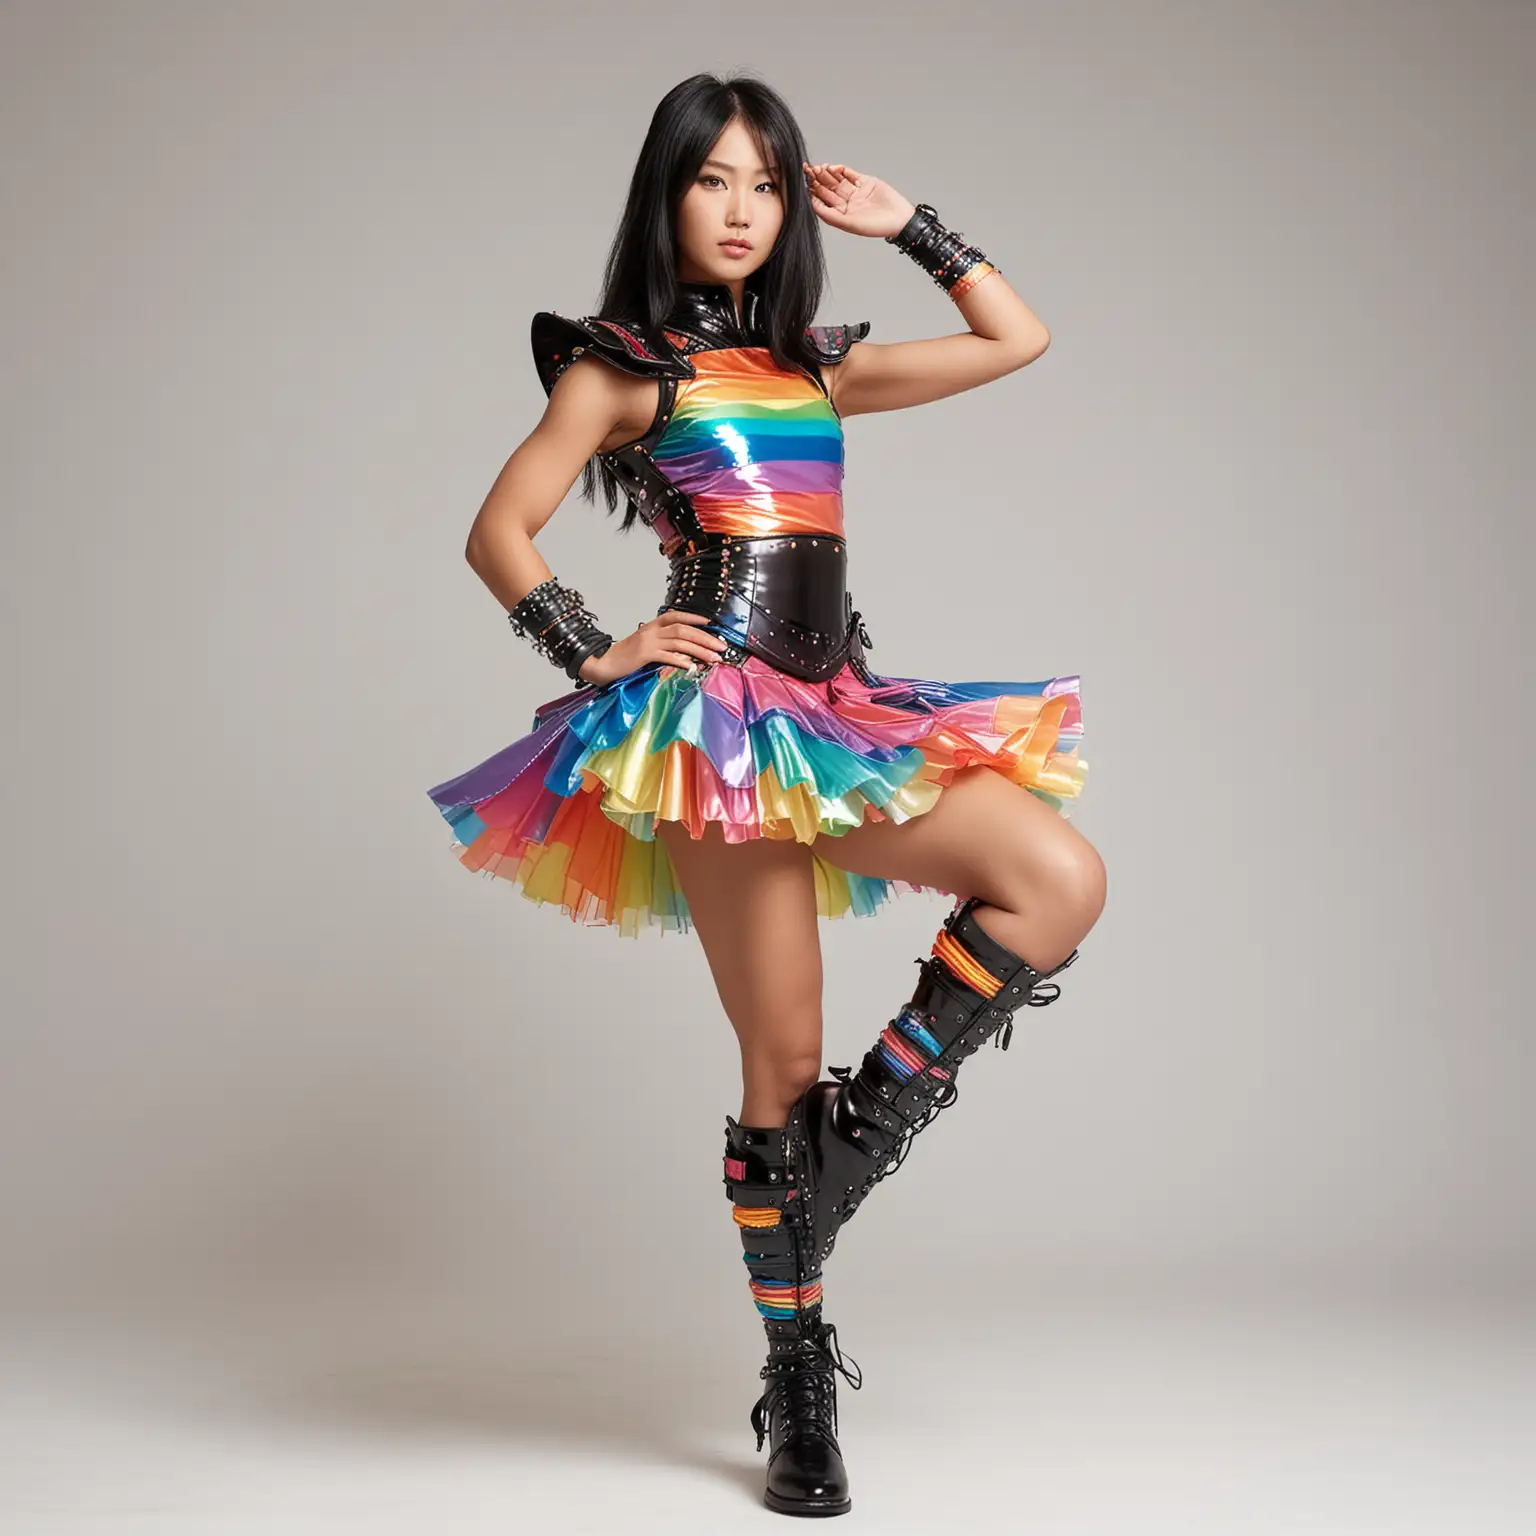 Japanese Supermodel in Rainbow SamuraiKnight Armor and Ballerina Tutu